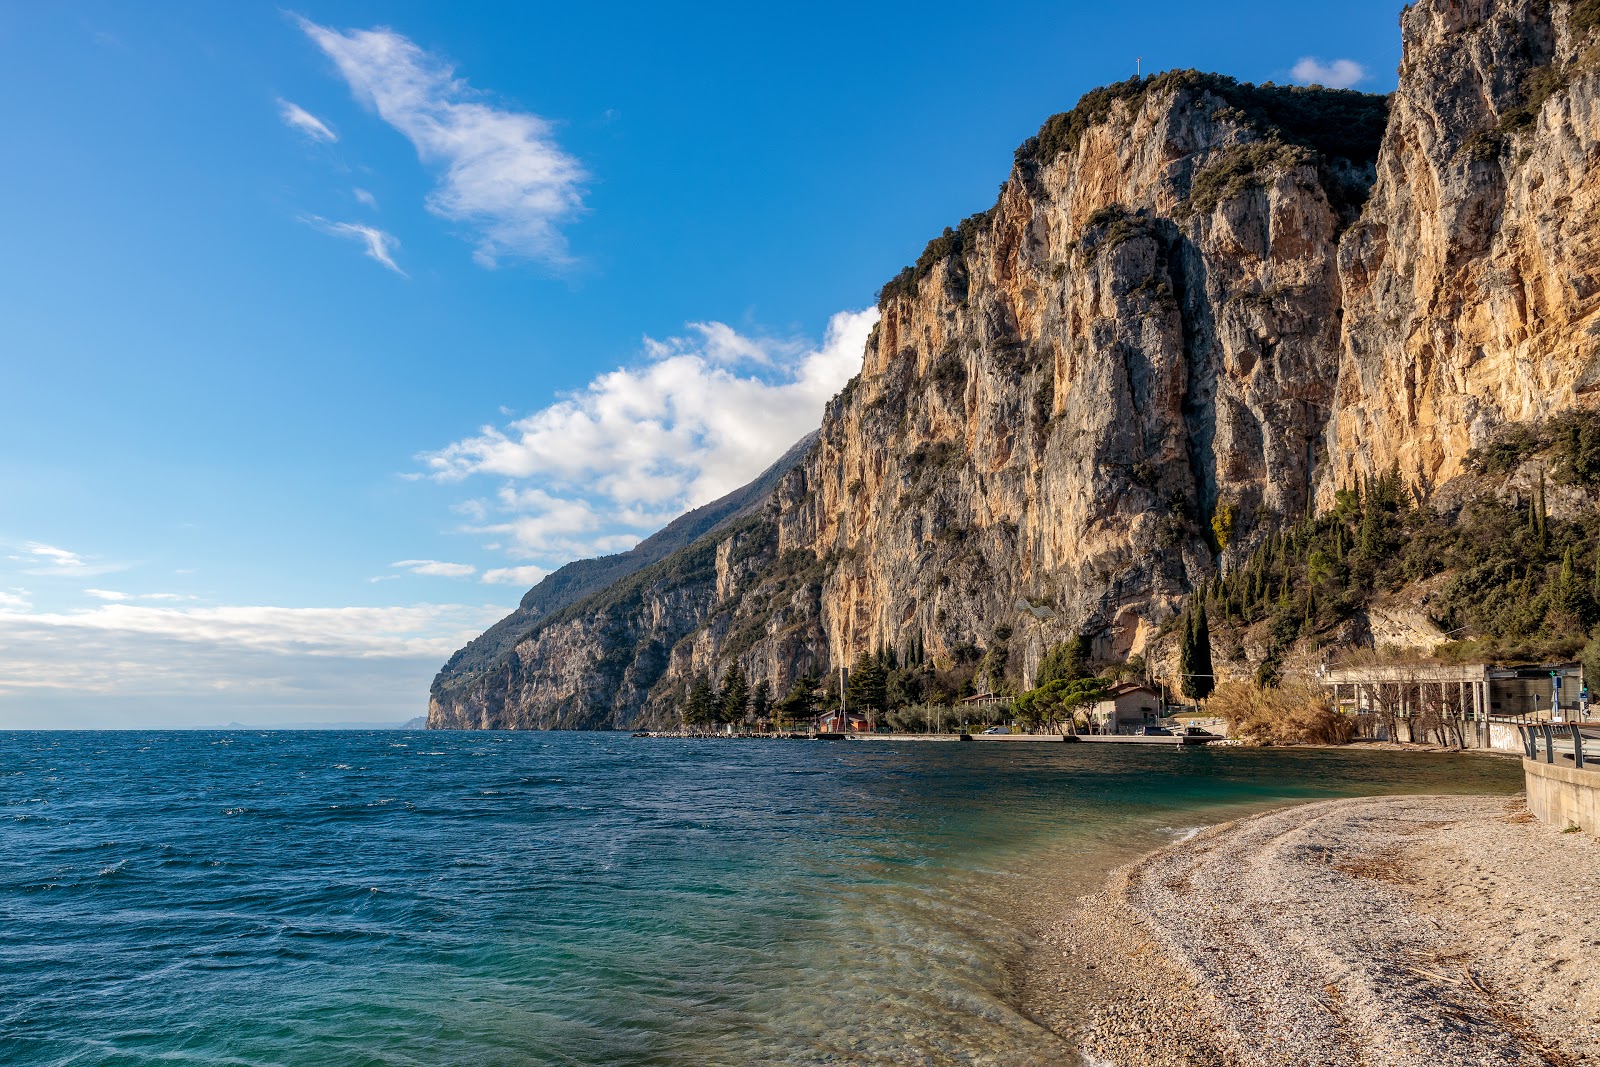 Photo of Spiaggia Tignale with gray fine pebble surface